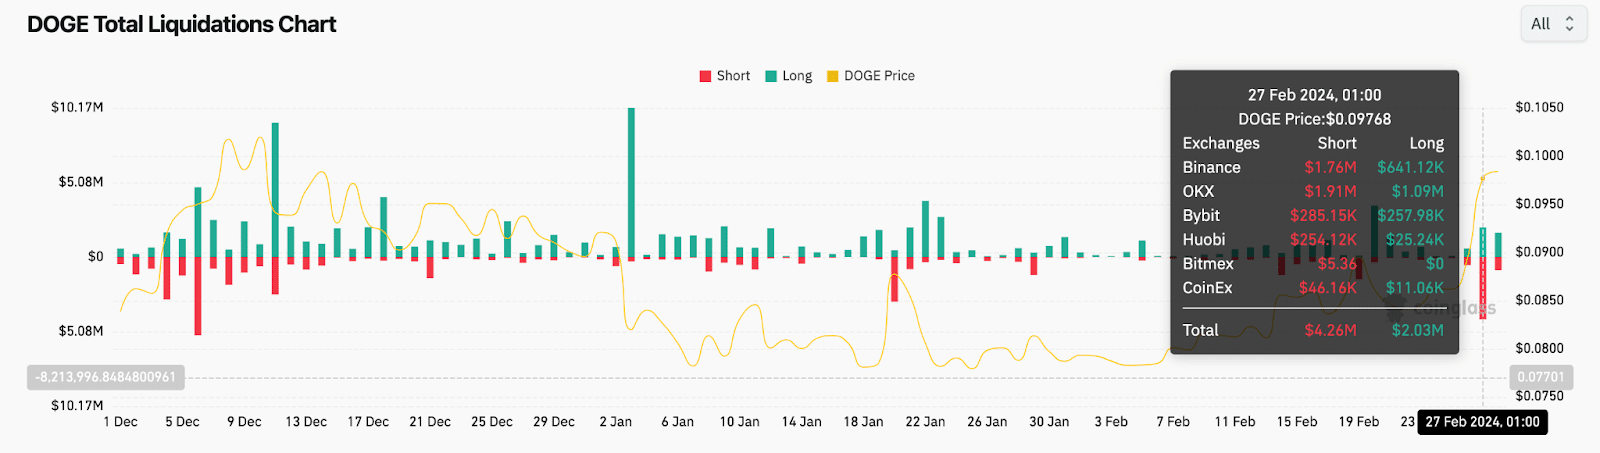 Dogecoin (DOGE) Total Liquidations Chart vs. Price